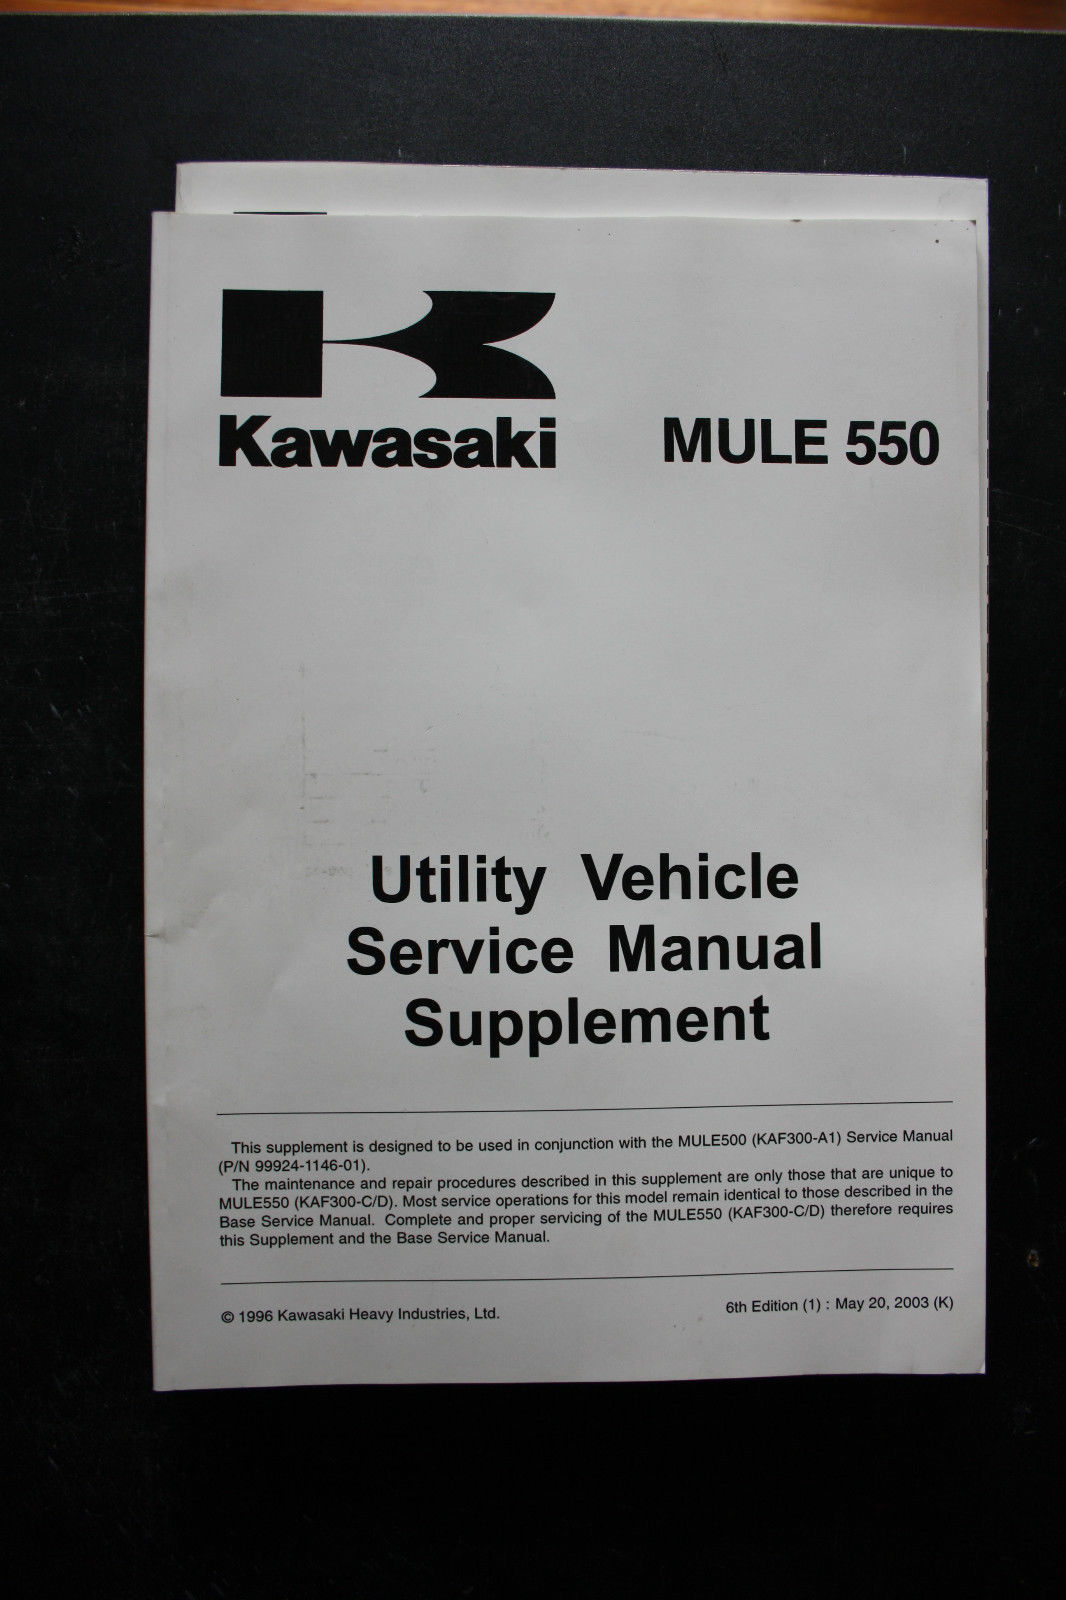 GENUINE KAWASAKI SERVICE MANUAL SUPPLEMENT MULE 550 Kawasaki